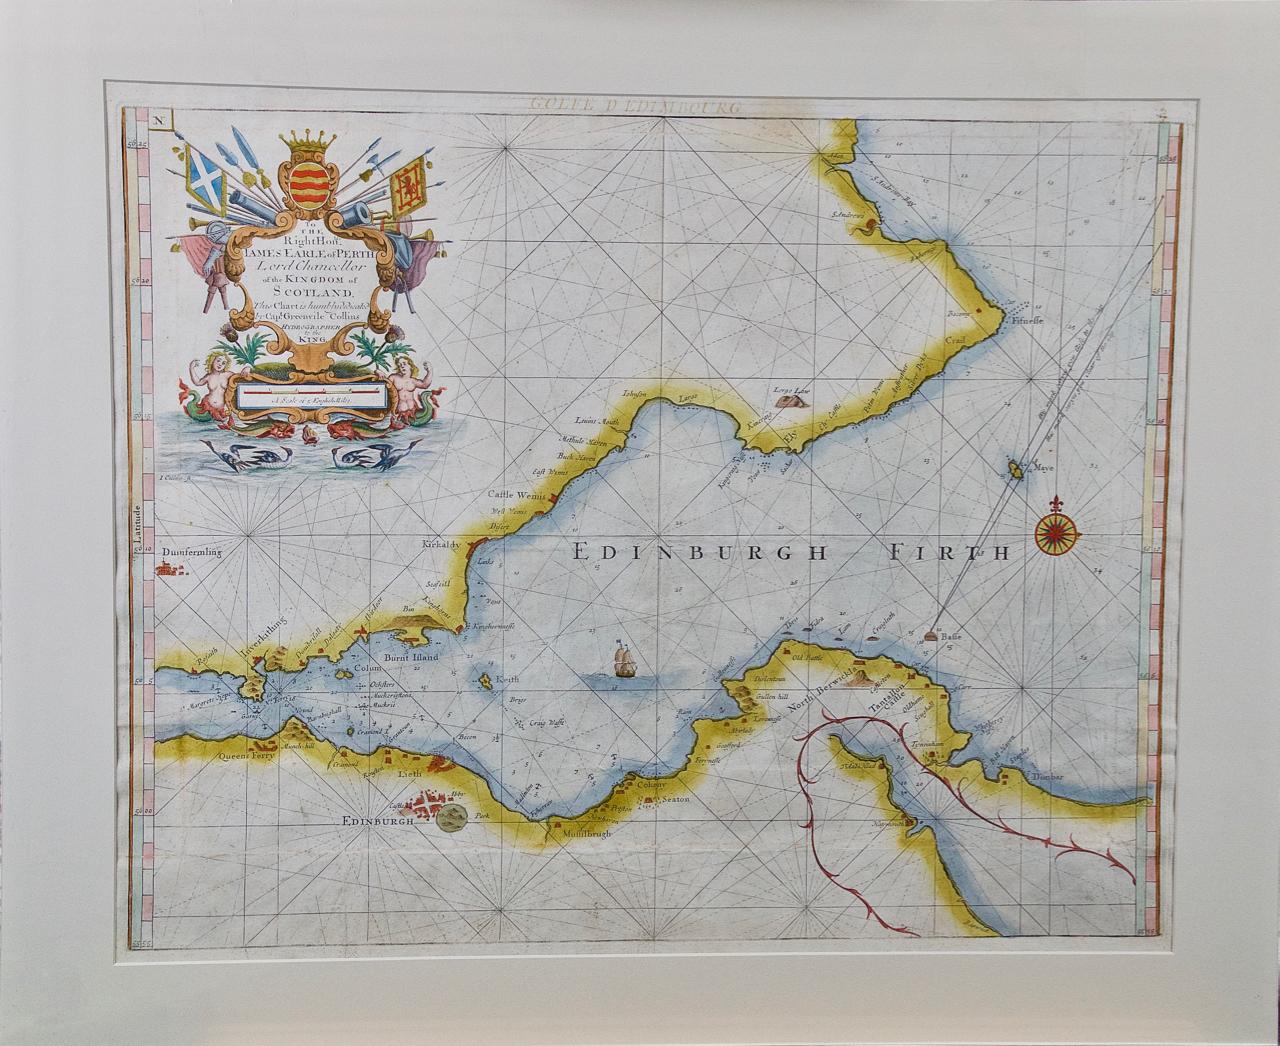 Captain Greenvile Collins Landscape Print - Edinburgh, Scotland: An Original 17th C. Hand-Colored Engraved Sea Chart